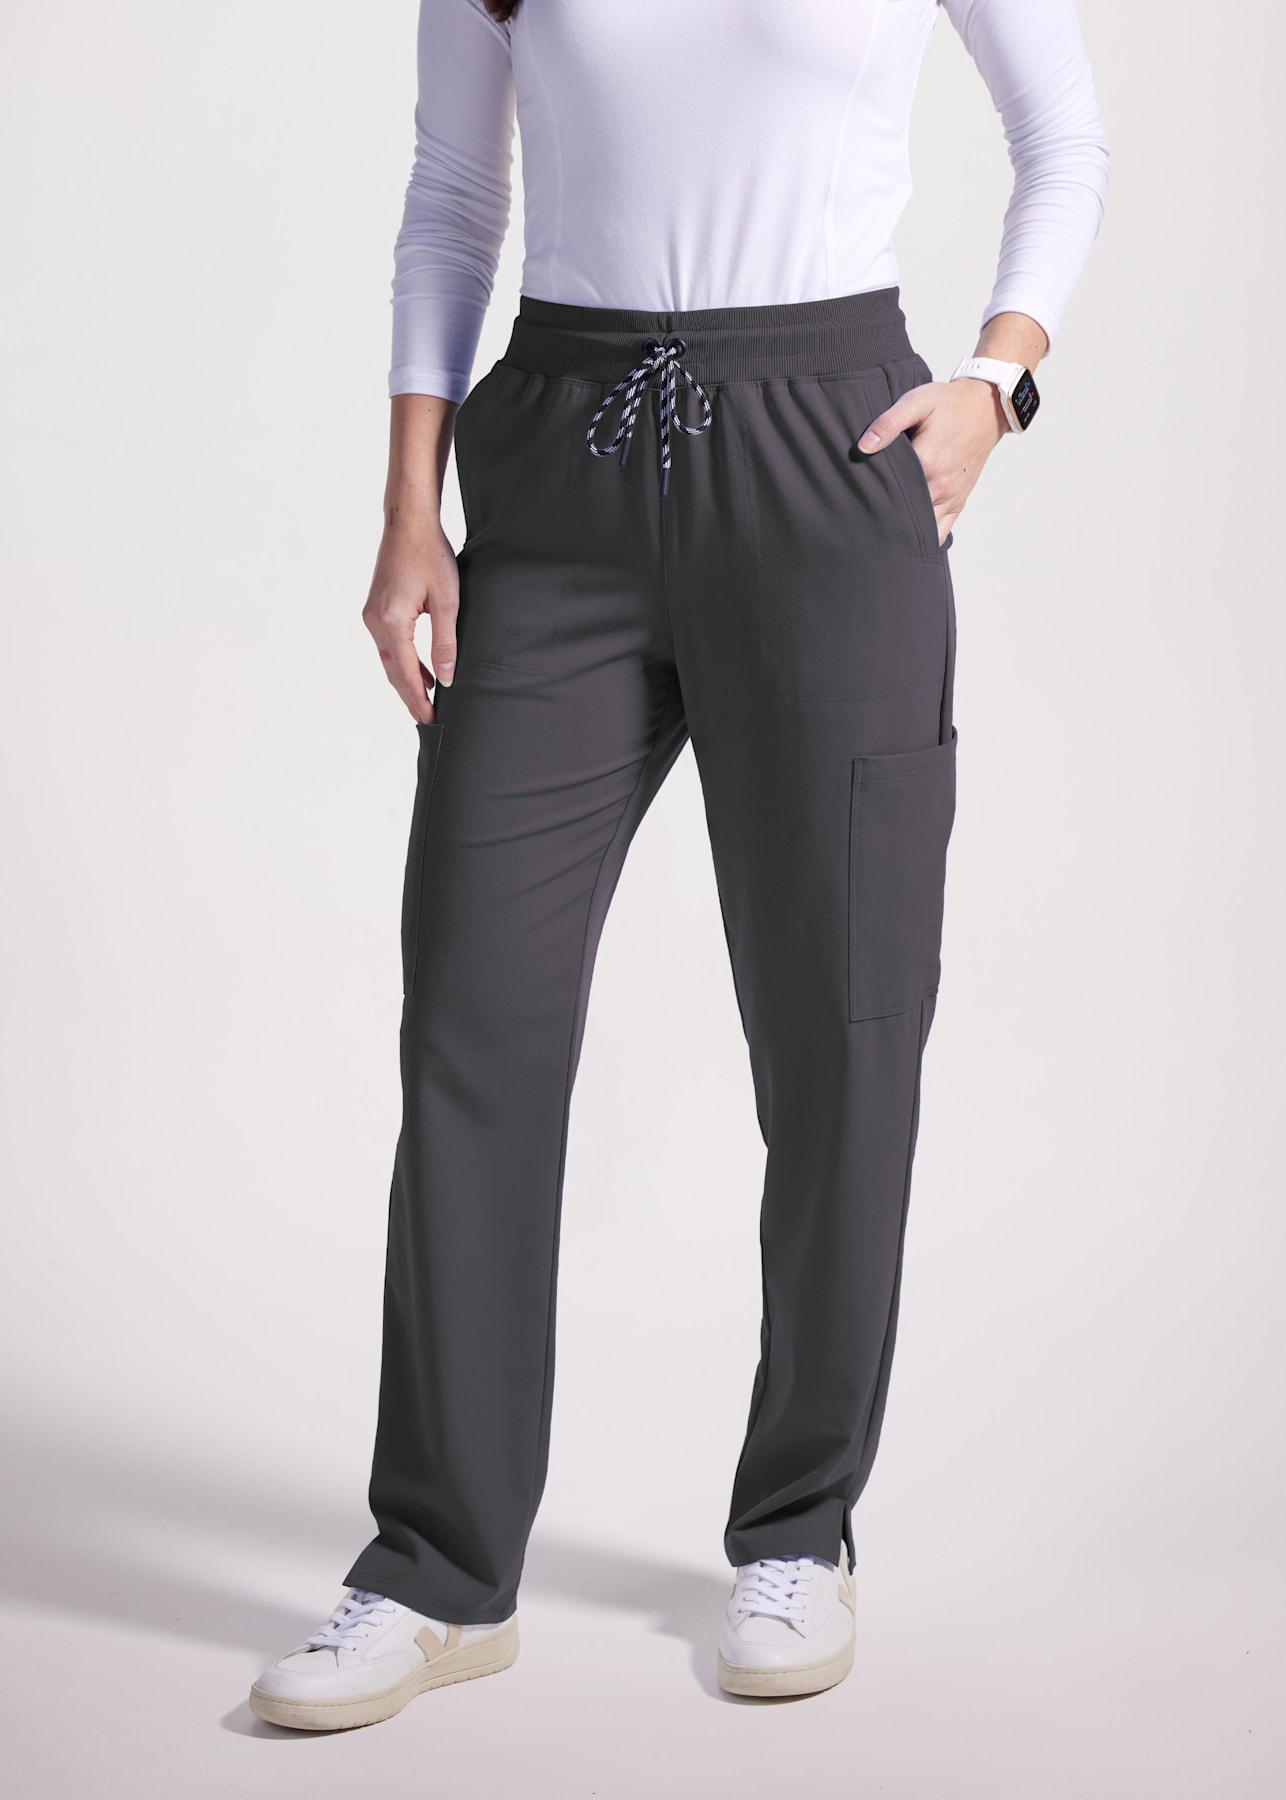 Greys Anatomy: Womens 4-pocket Contrast Waistband with drawcord